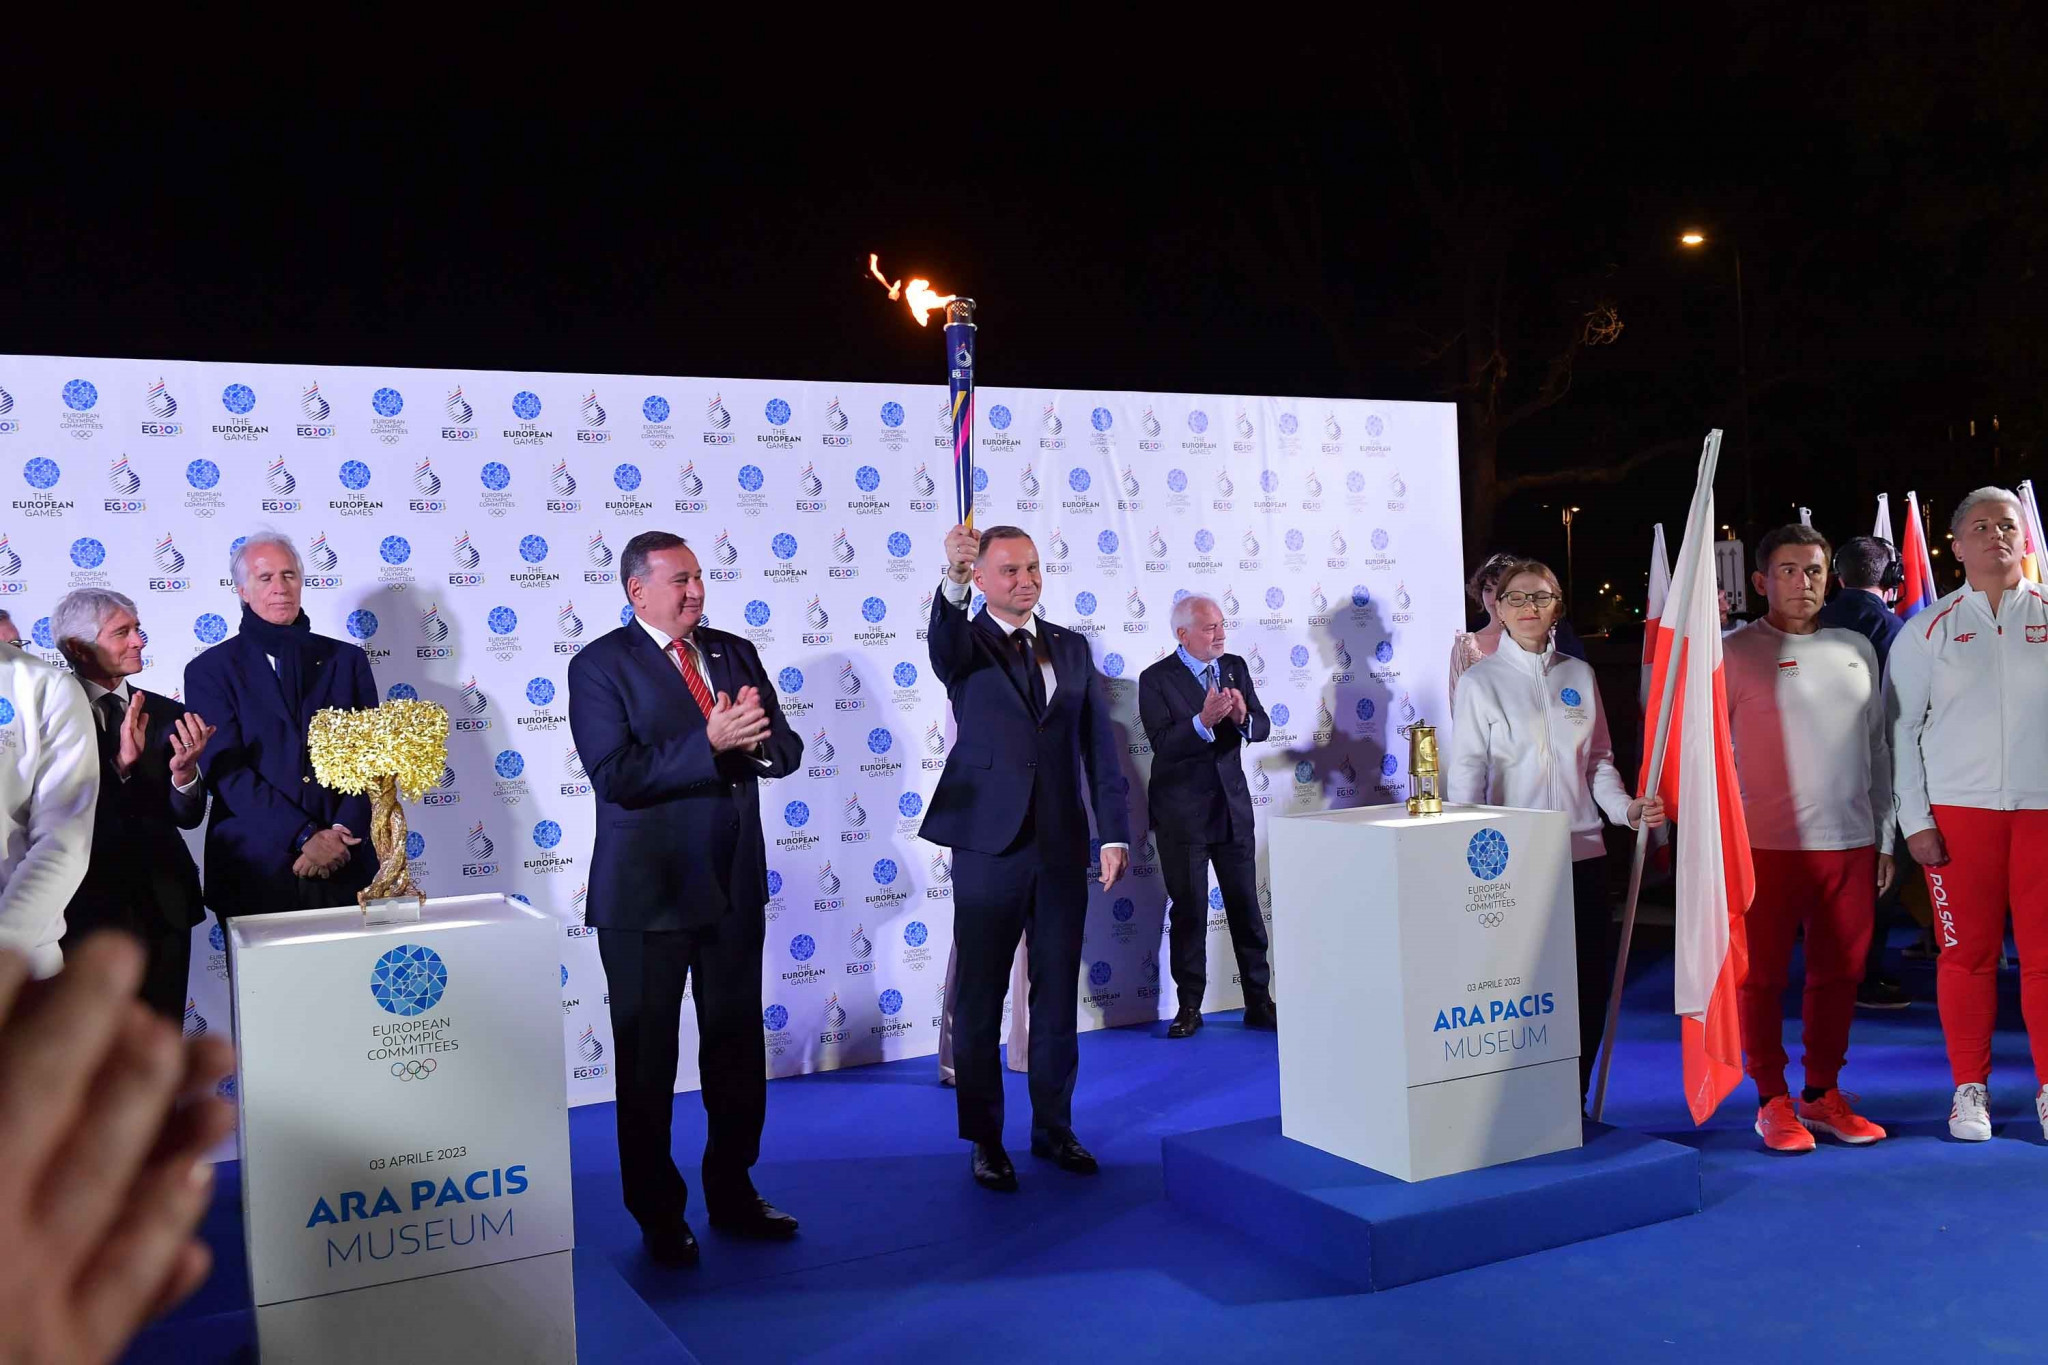 Kraków-Małopolska 2023 "ready" to host European Games after Flame of Peace Lighting Ceremony